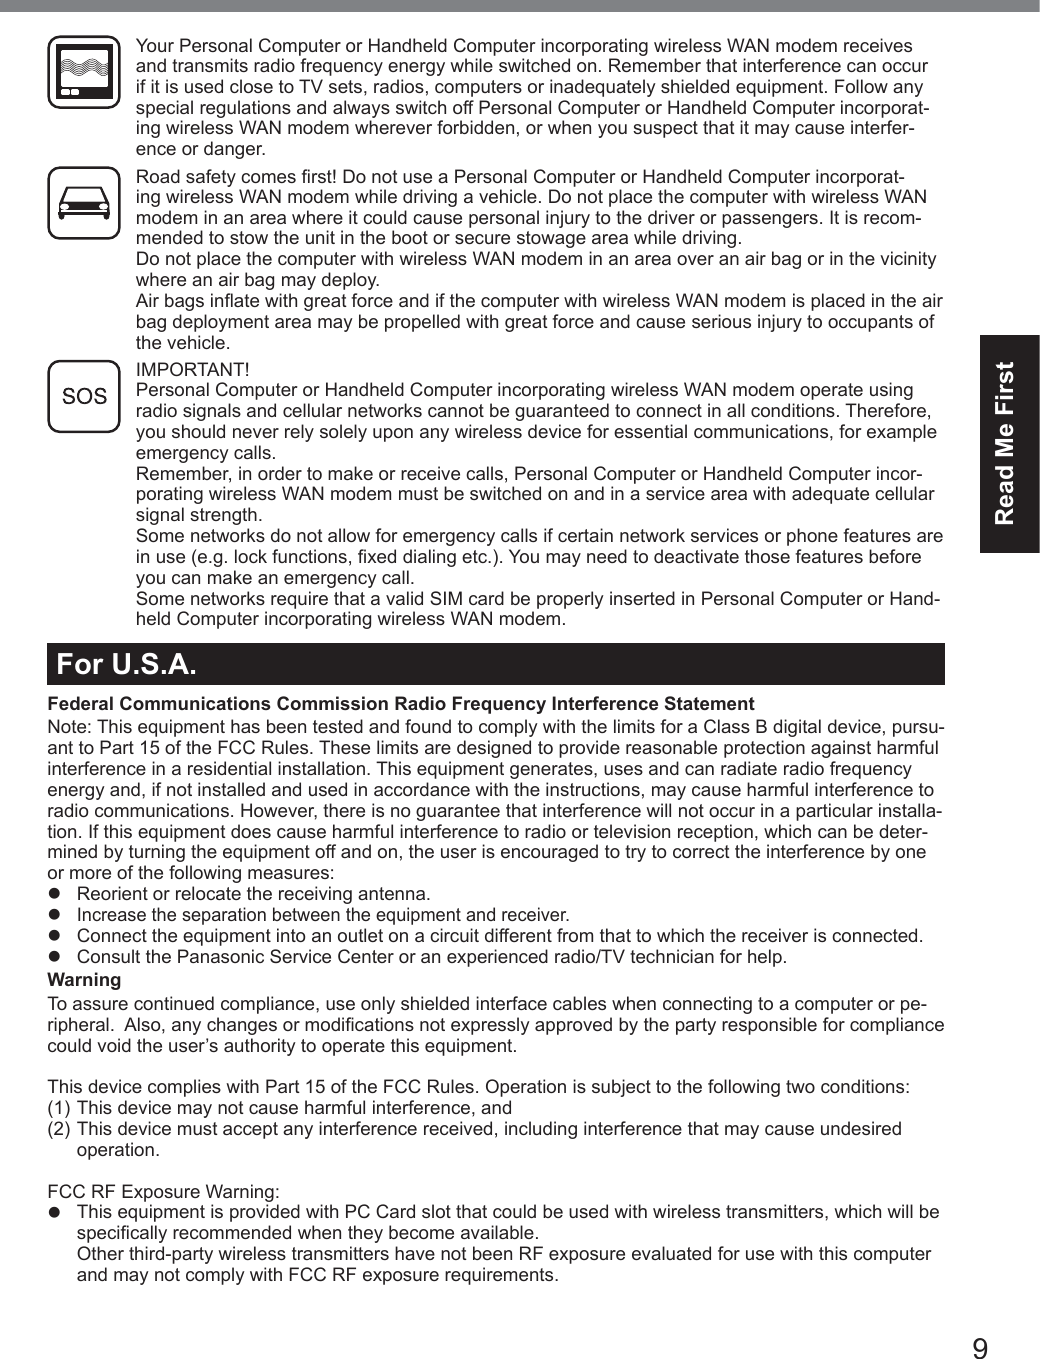 Page 9 of Panasonic of North America 9TGWW18A Radio Module User Manual FM171 Readme DHQX1325ZA T1  OI US M indb